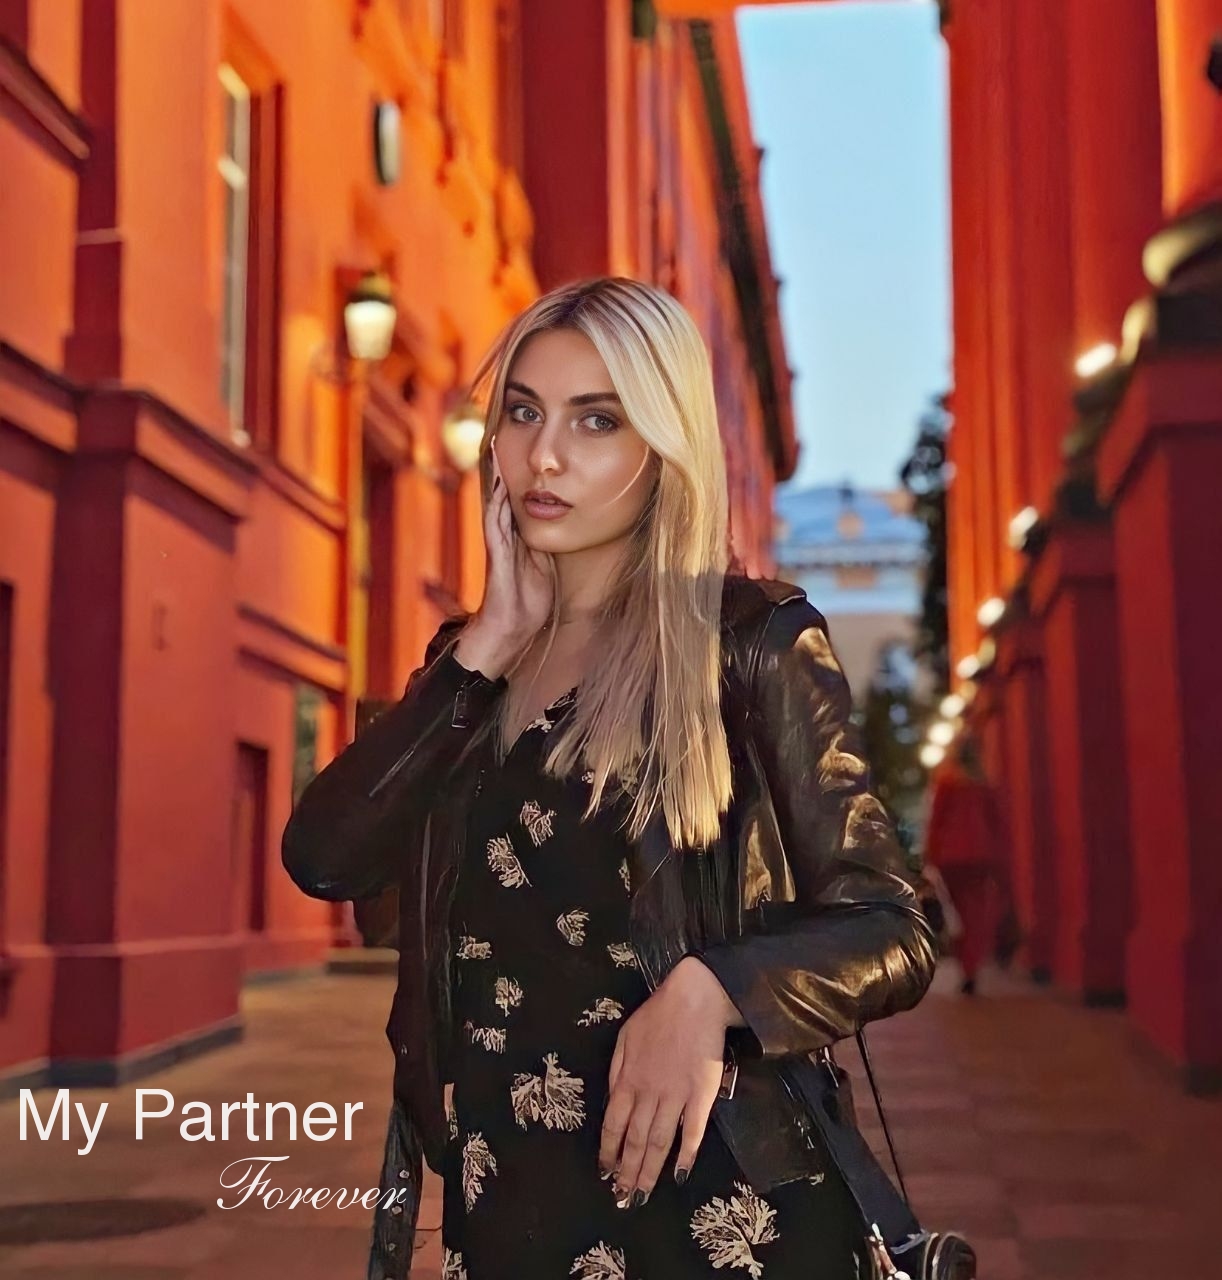 Dating Service to Meet Stunning Ukrainian Lady Darya from Kiev, Ukraine